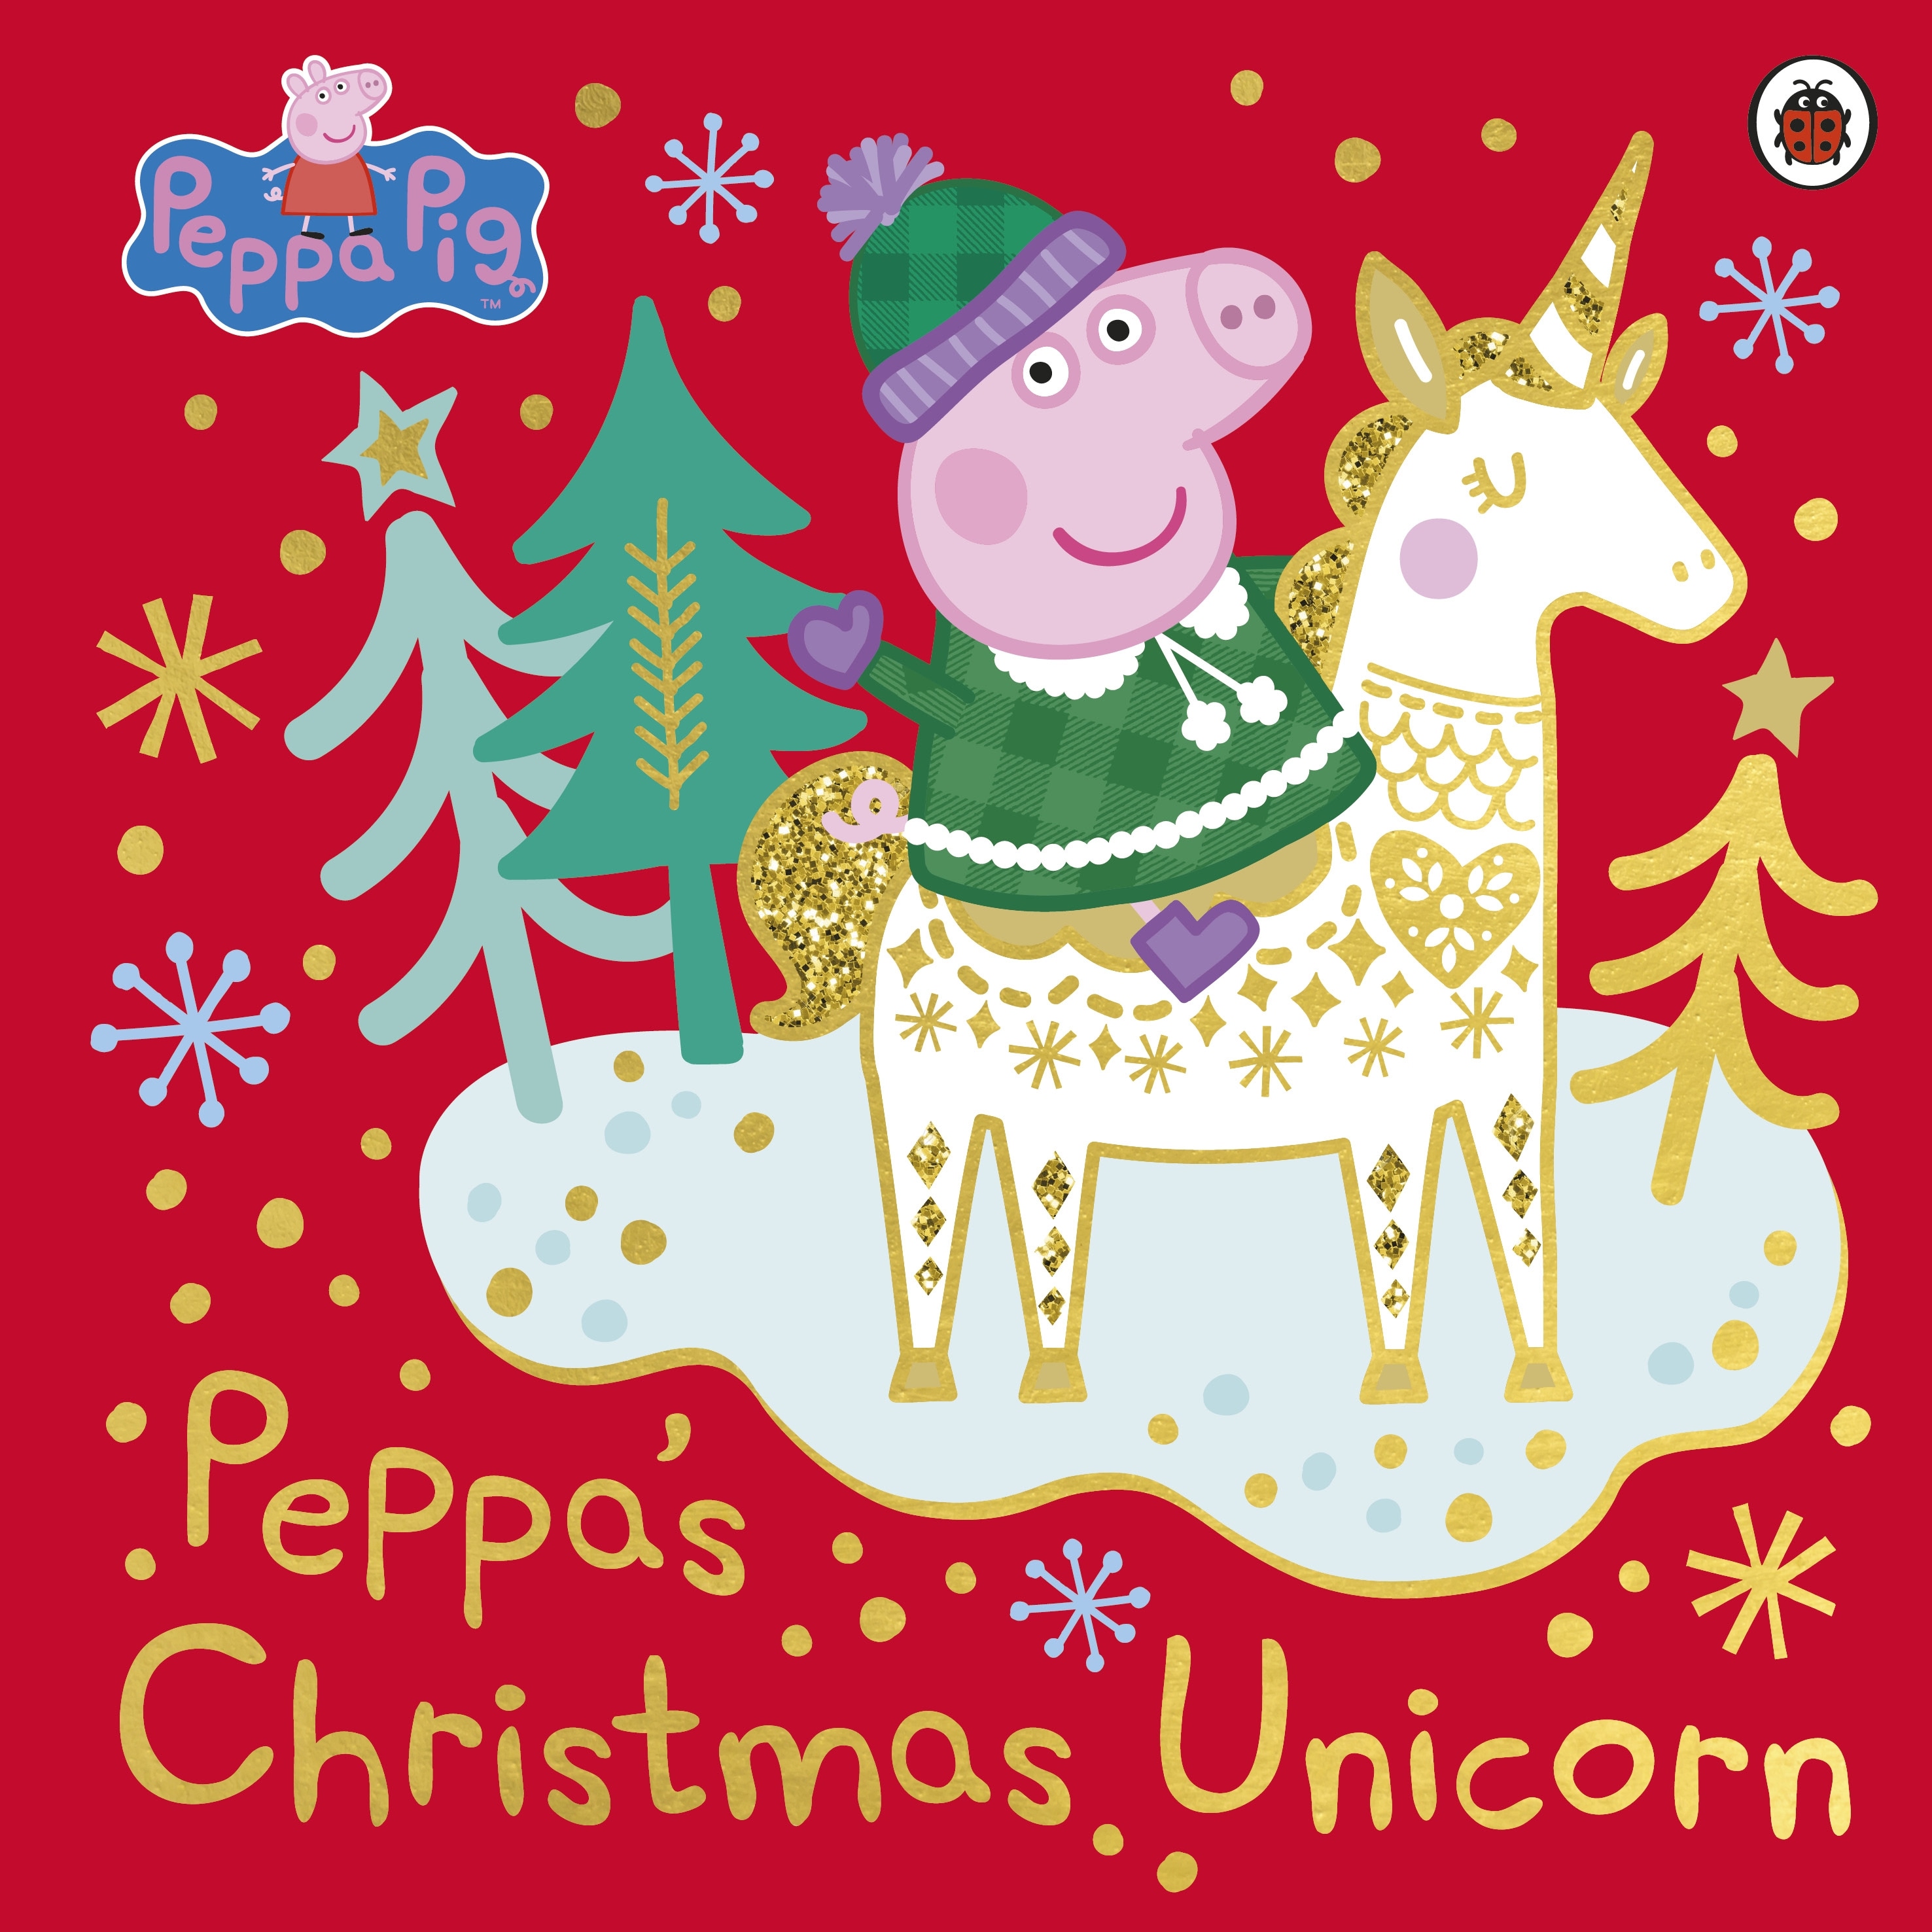 Book “Peppa Pig: Peppa's Christmas Unicorn” by Peppa Pig — October 28, 2021